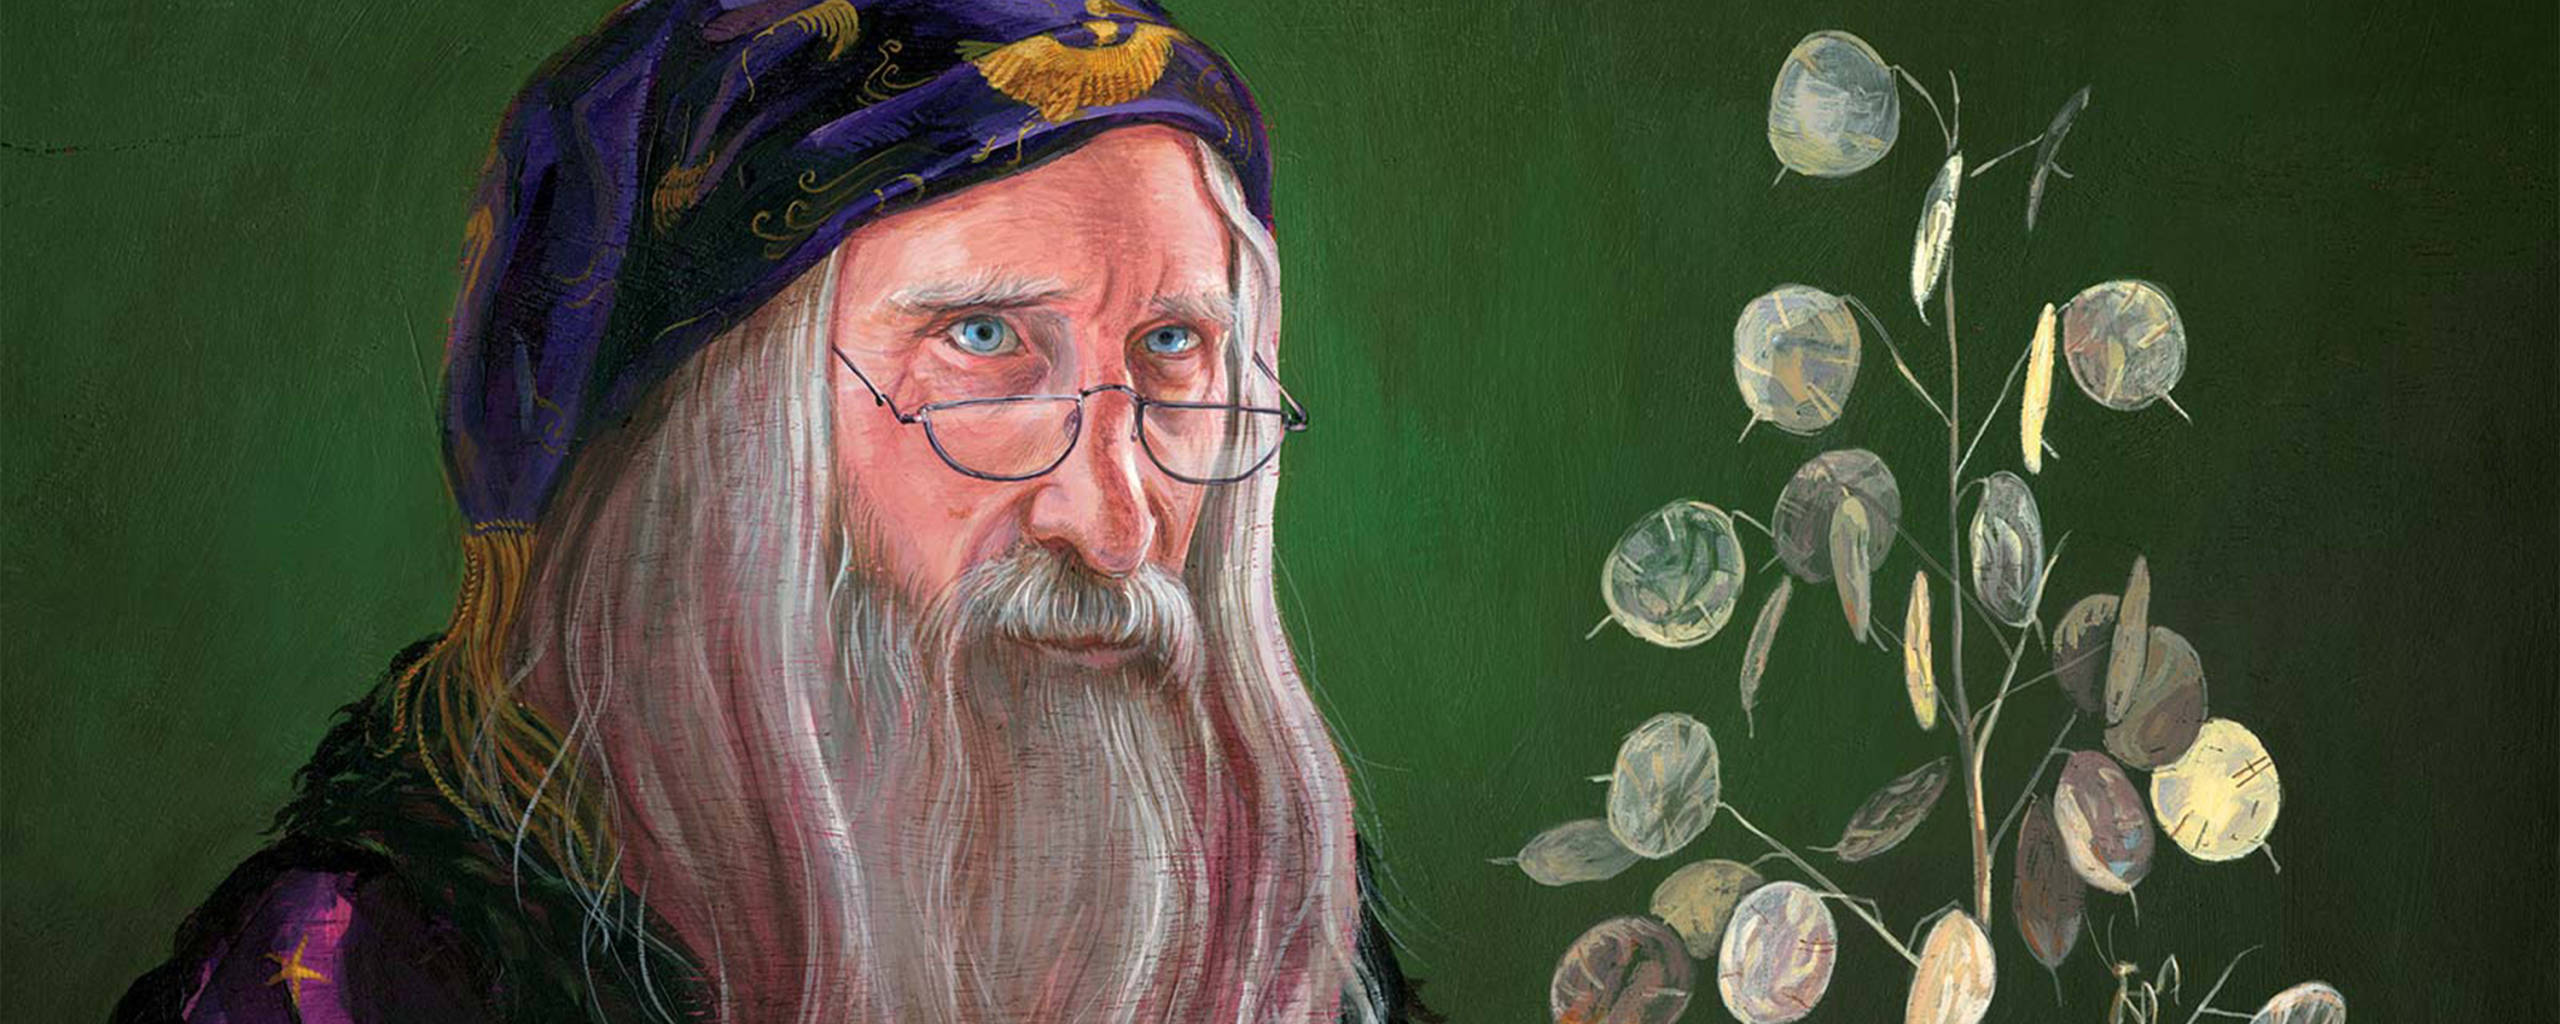 dumbledore-illustration-web-header